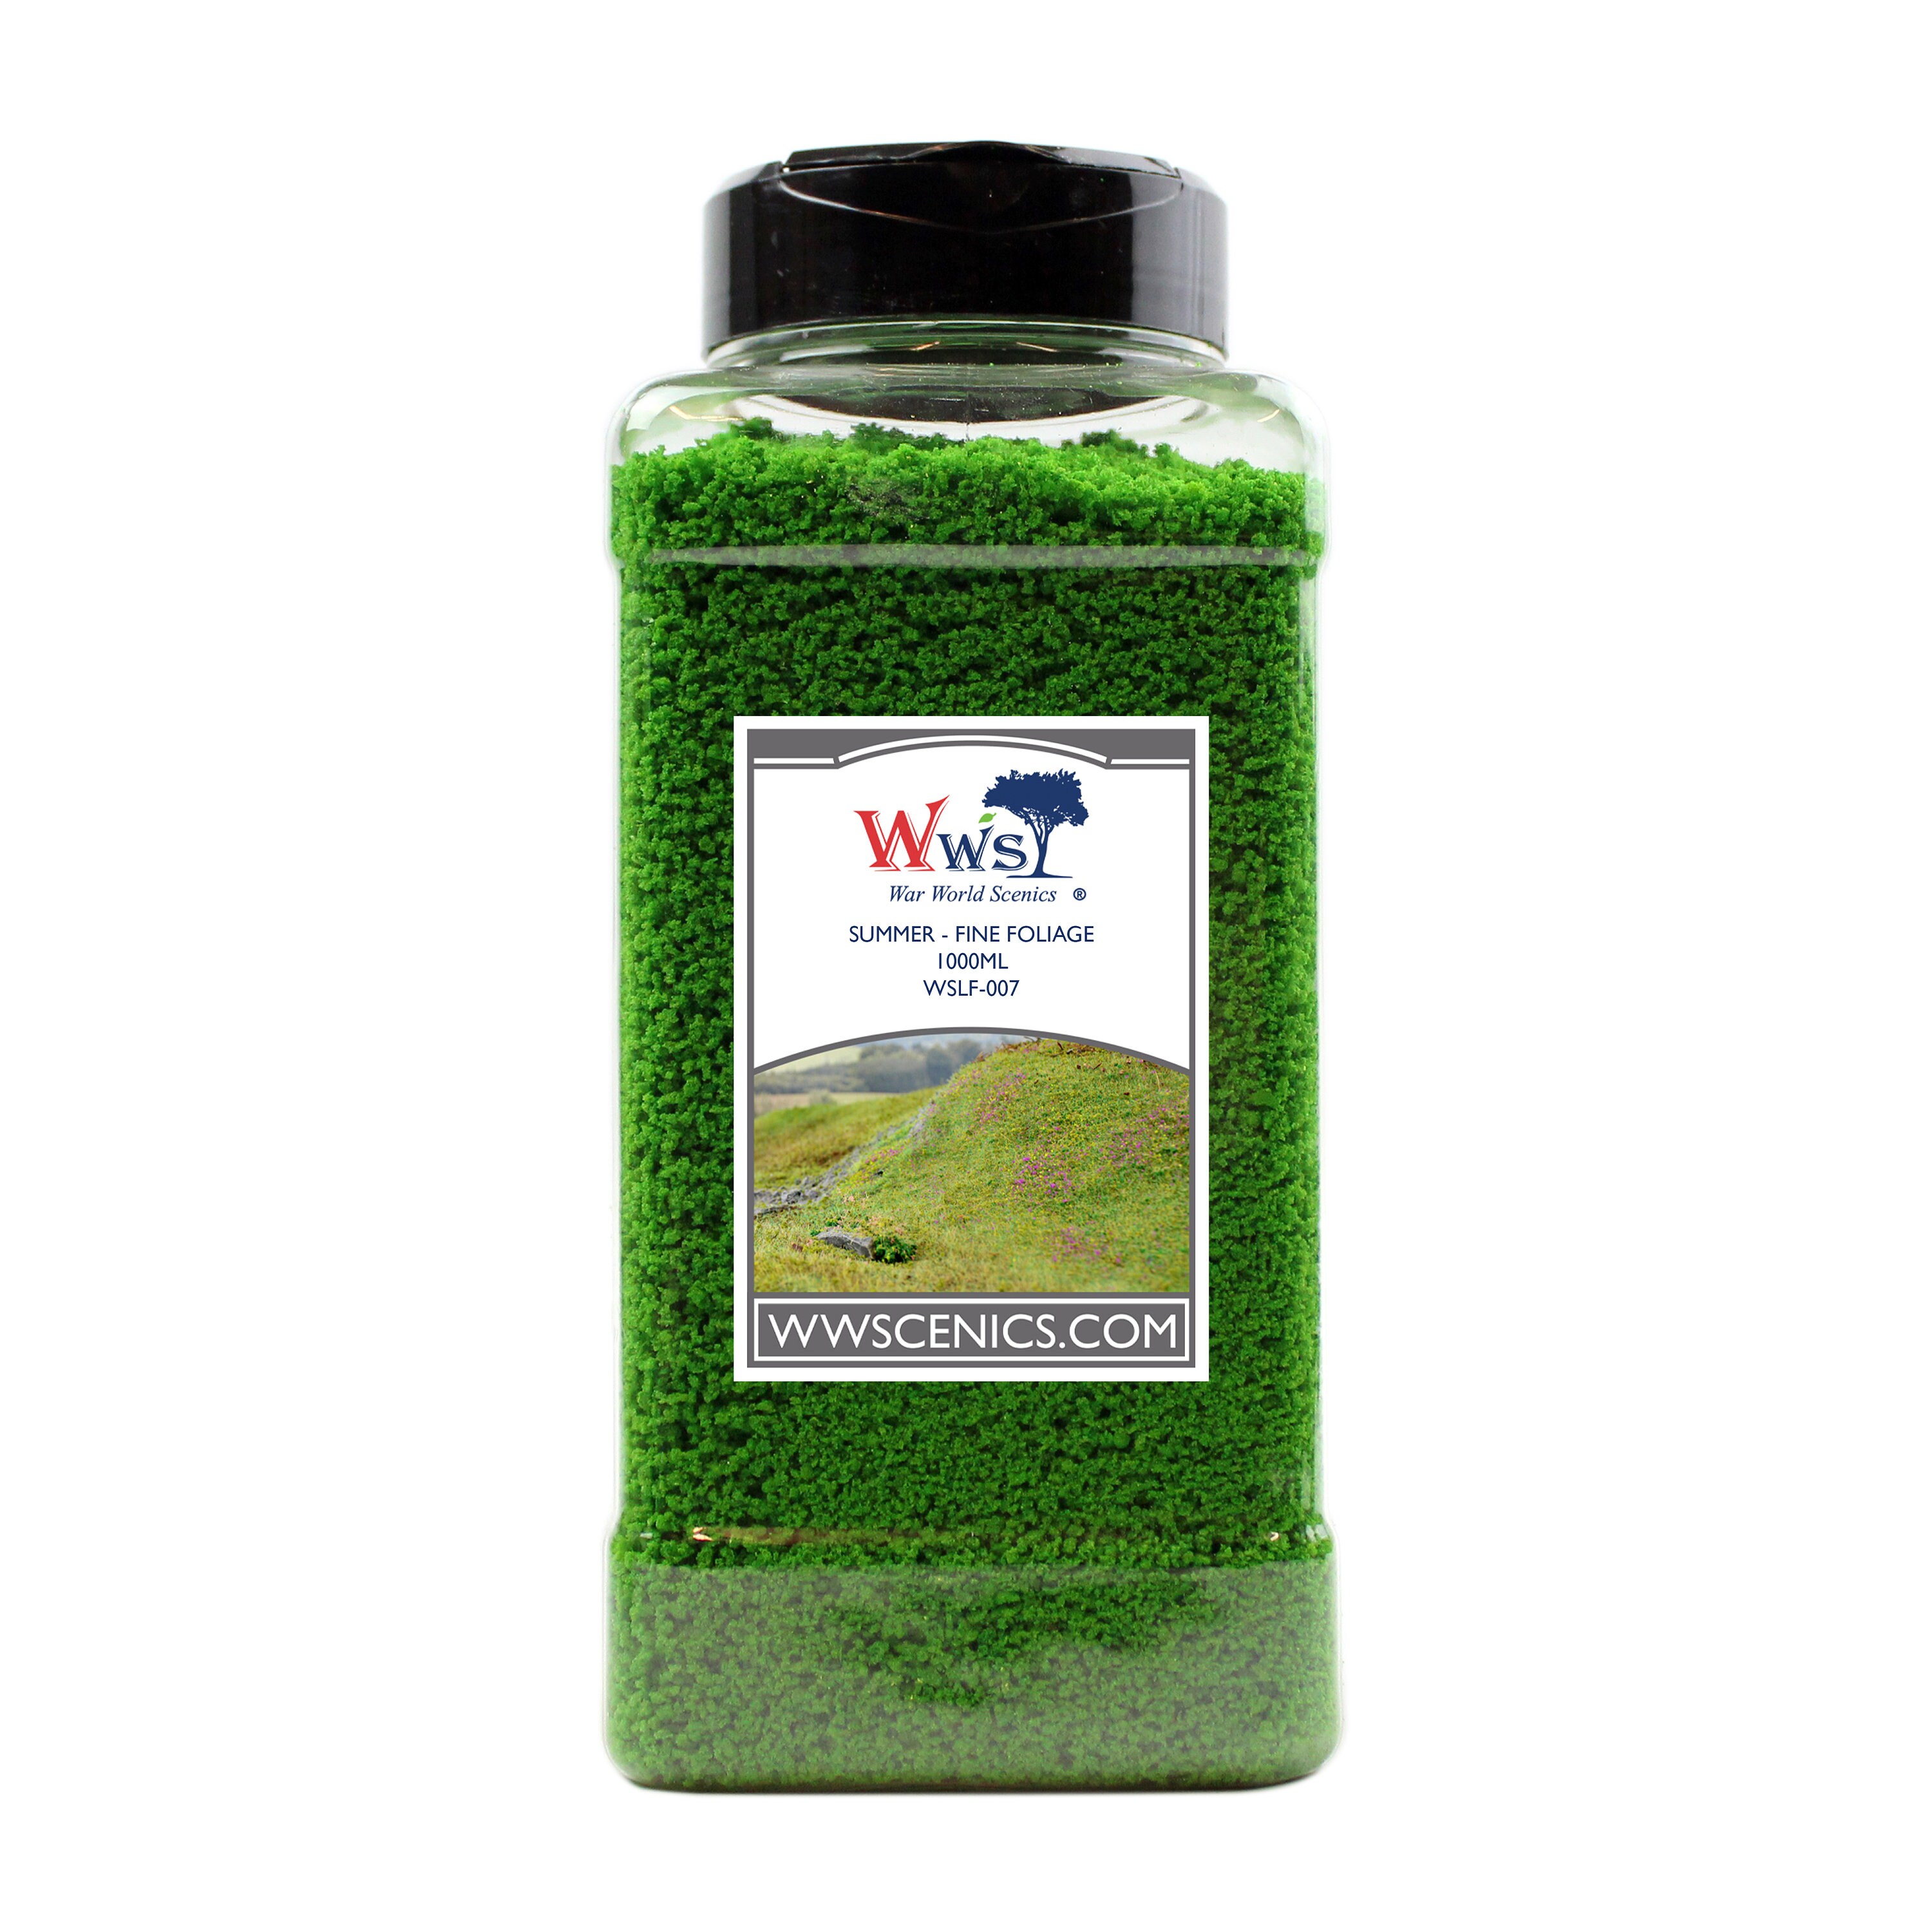 Spring 2mm Static Grass 1000ml by WWS - Model Railway Scenery Terrain for  sale online